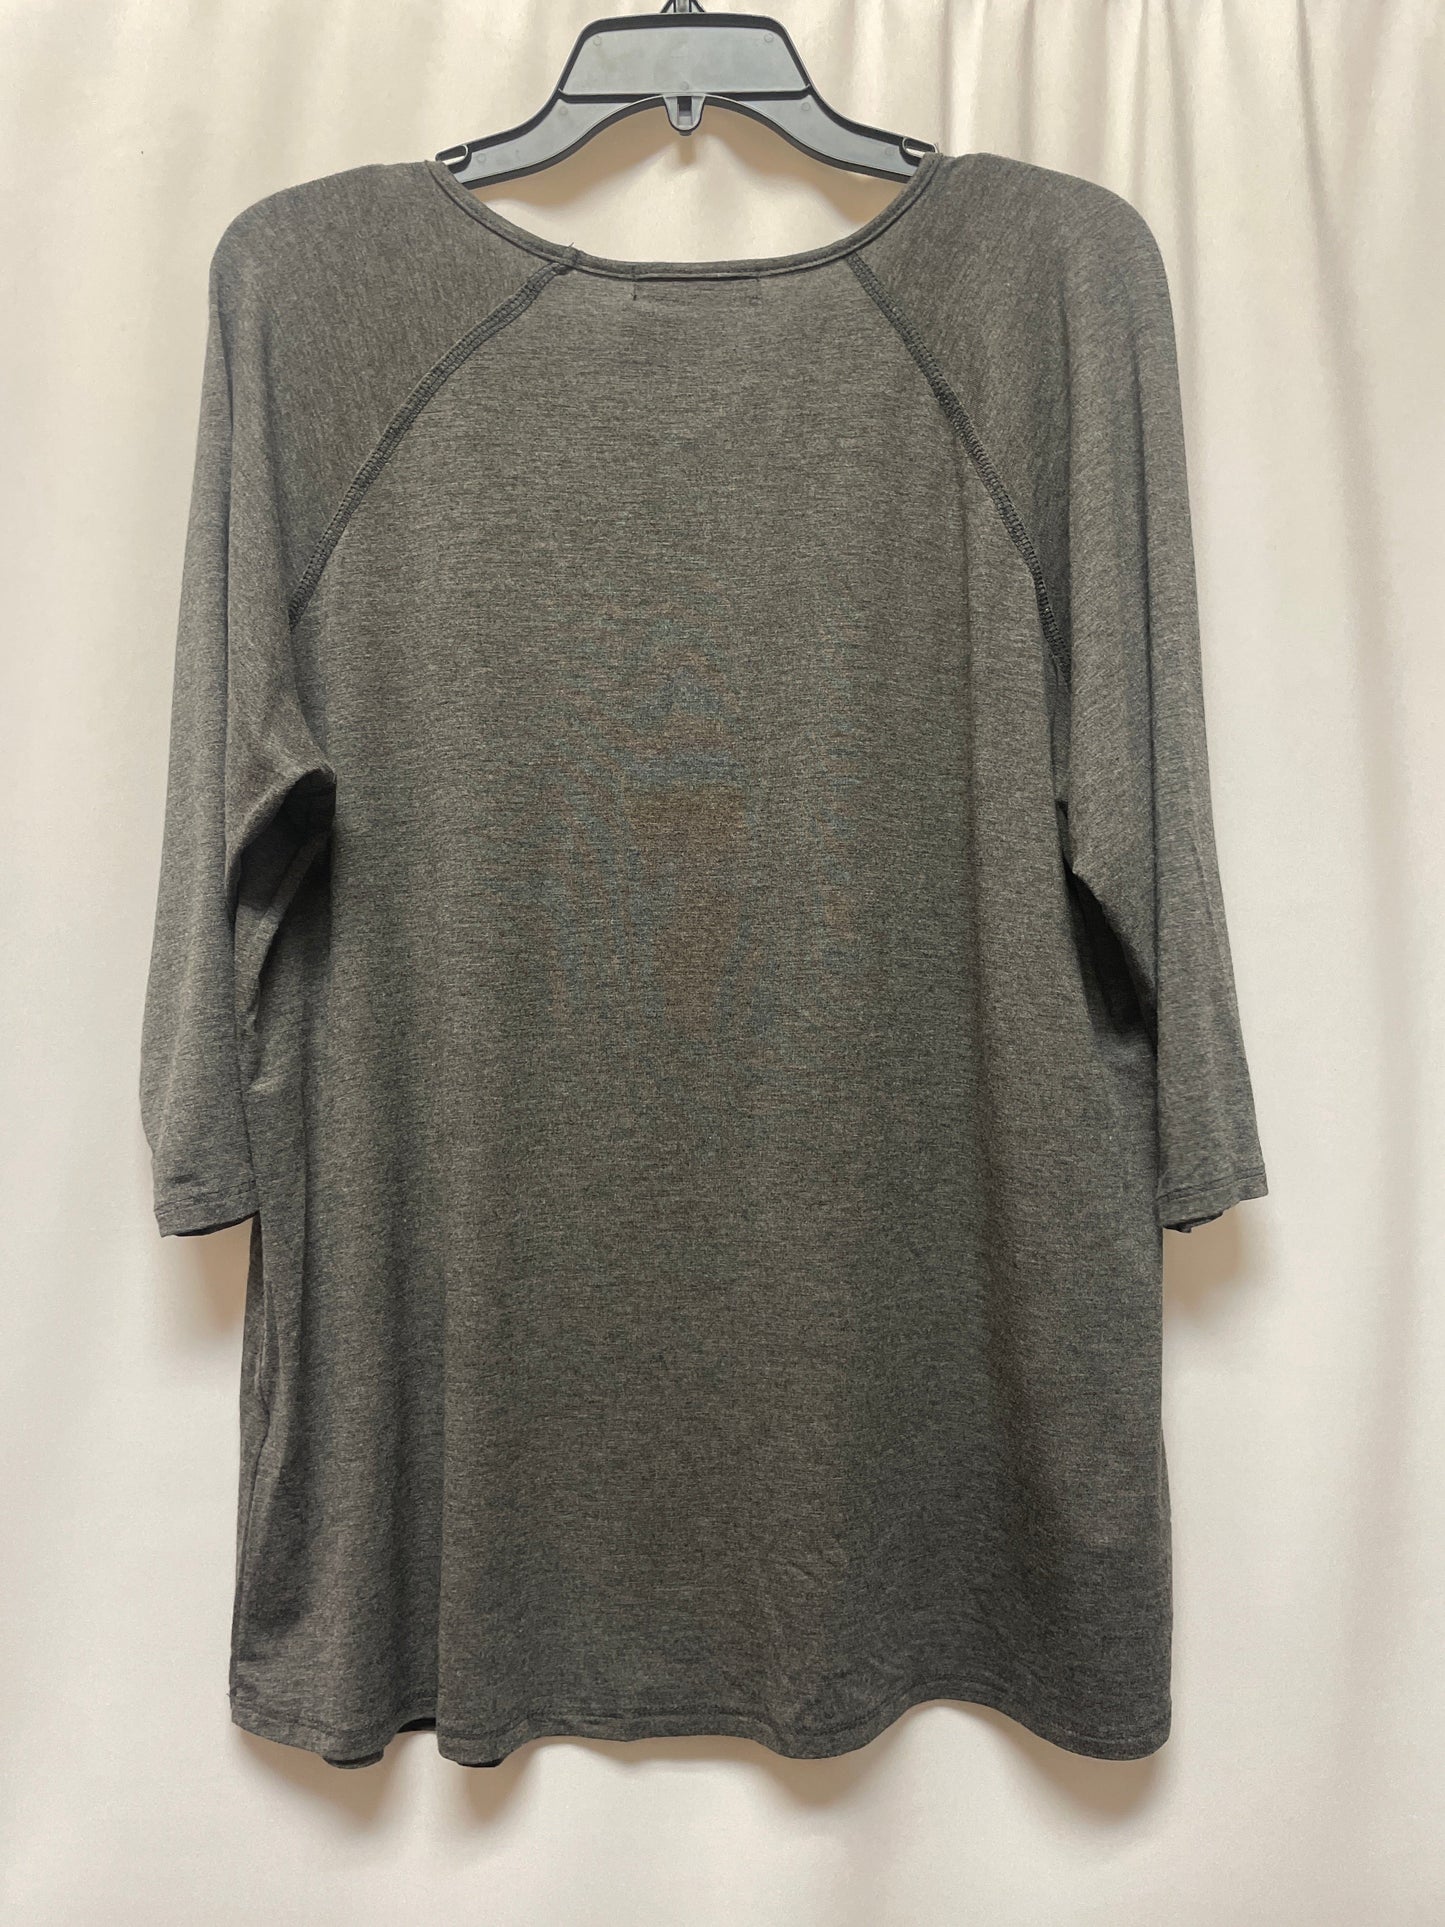 Grey Top Long Sleeve Kim & Cami, Size 1x